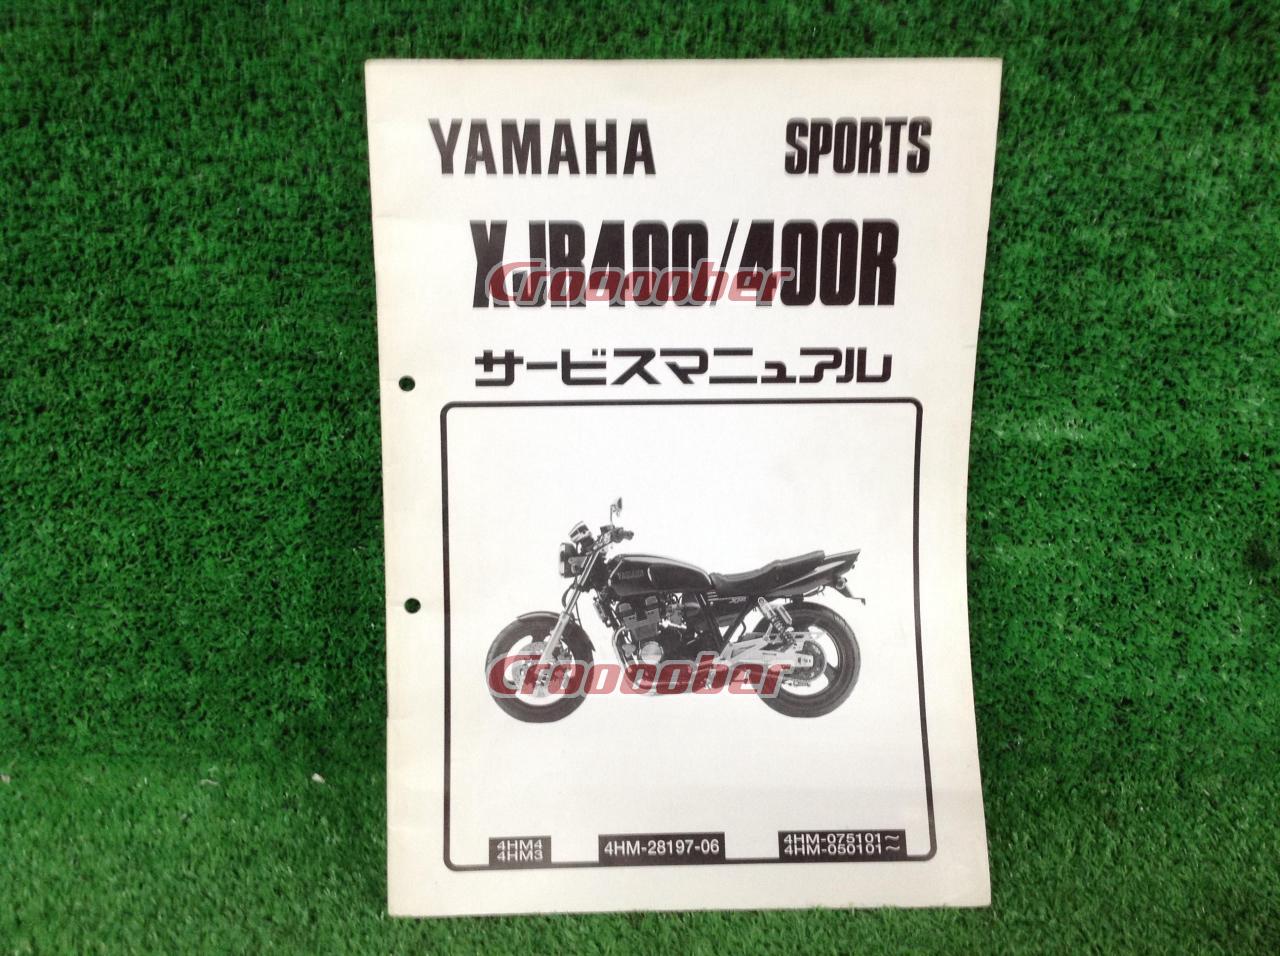 Yamaha XJR400 4HM Service Manual Published February 1995 | Other